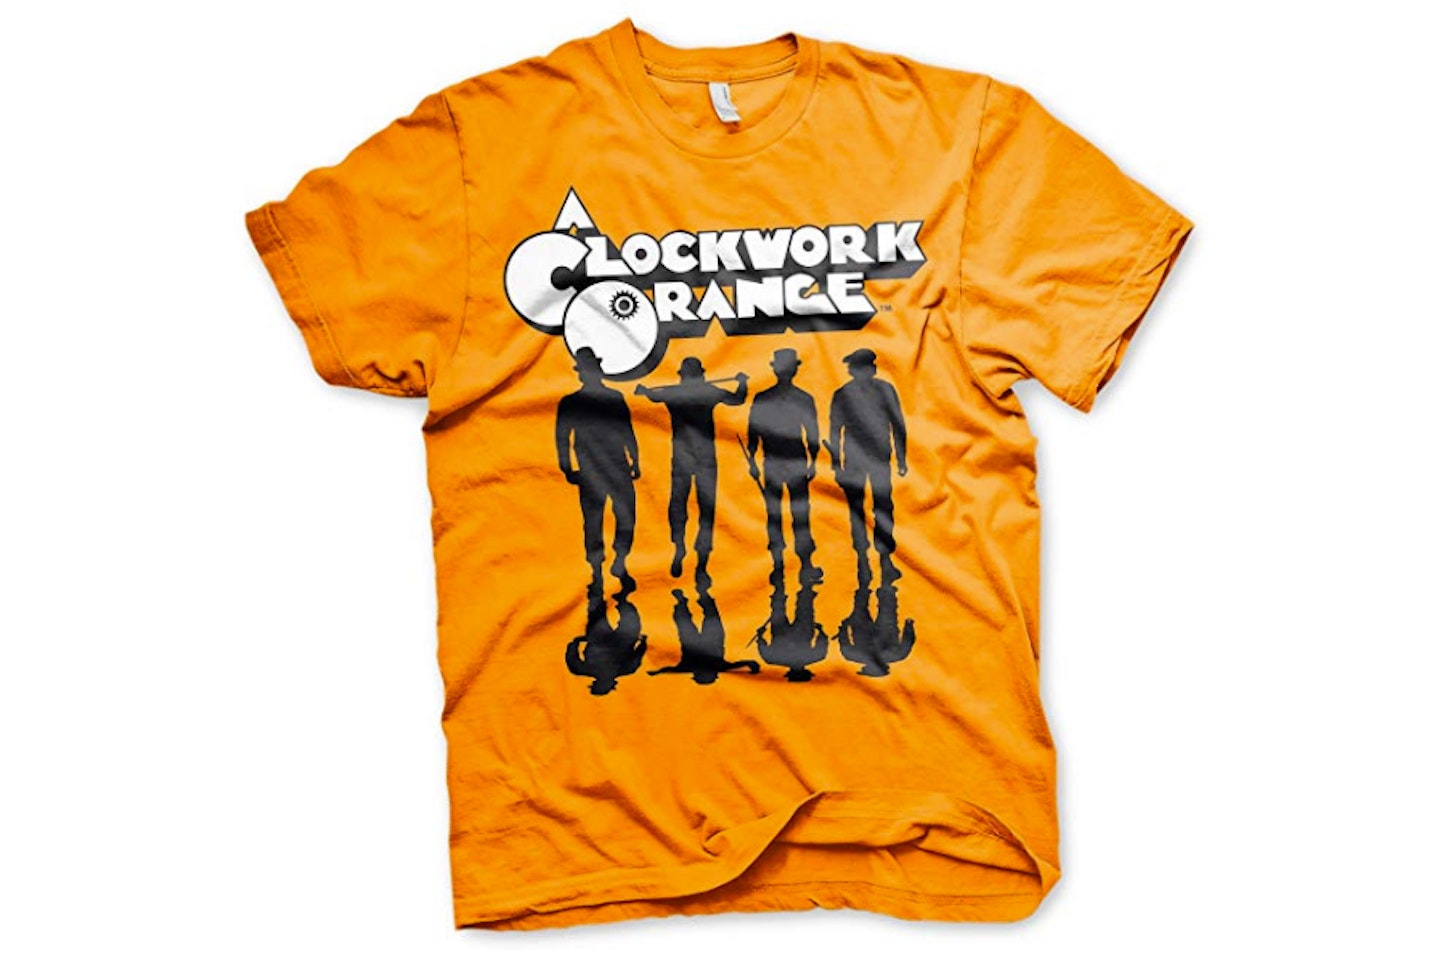 Shadows - Clockwork Orange. 1971